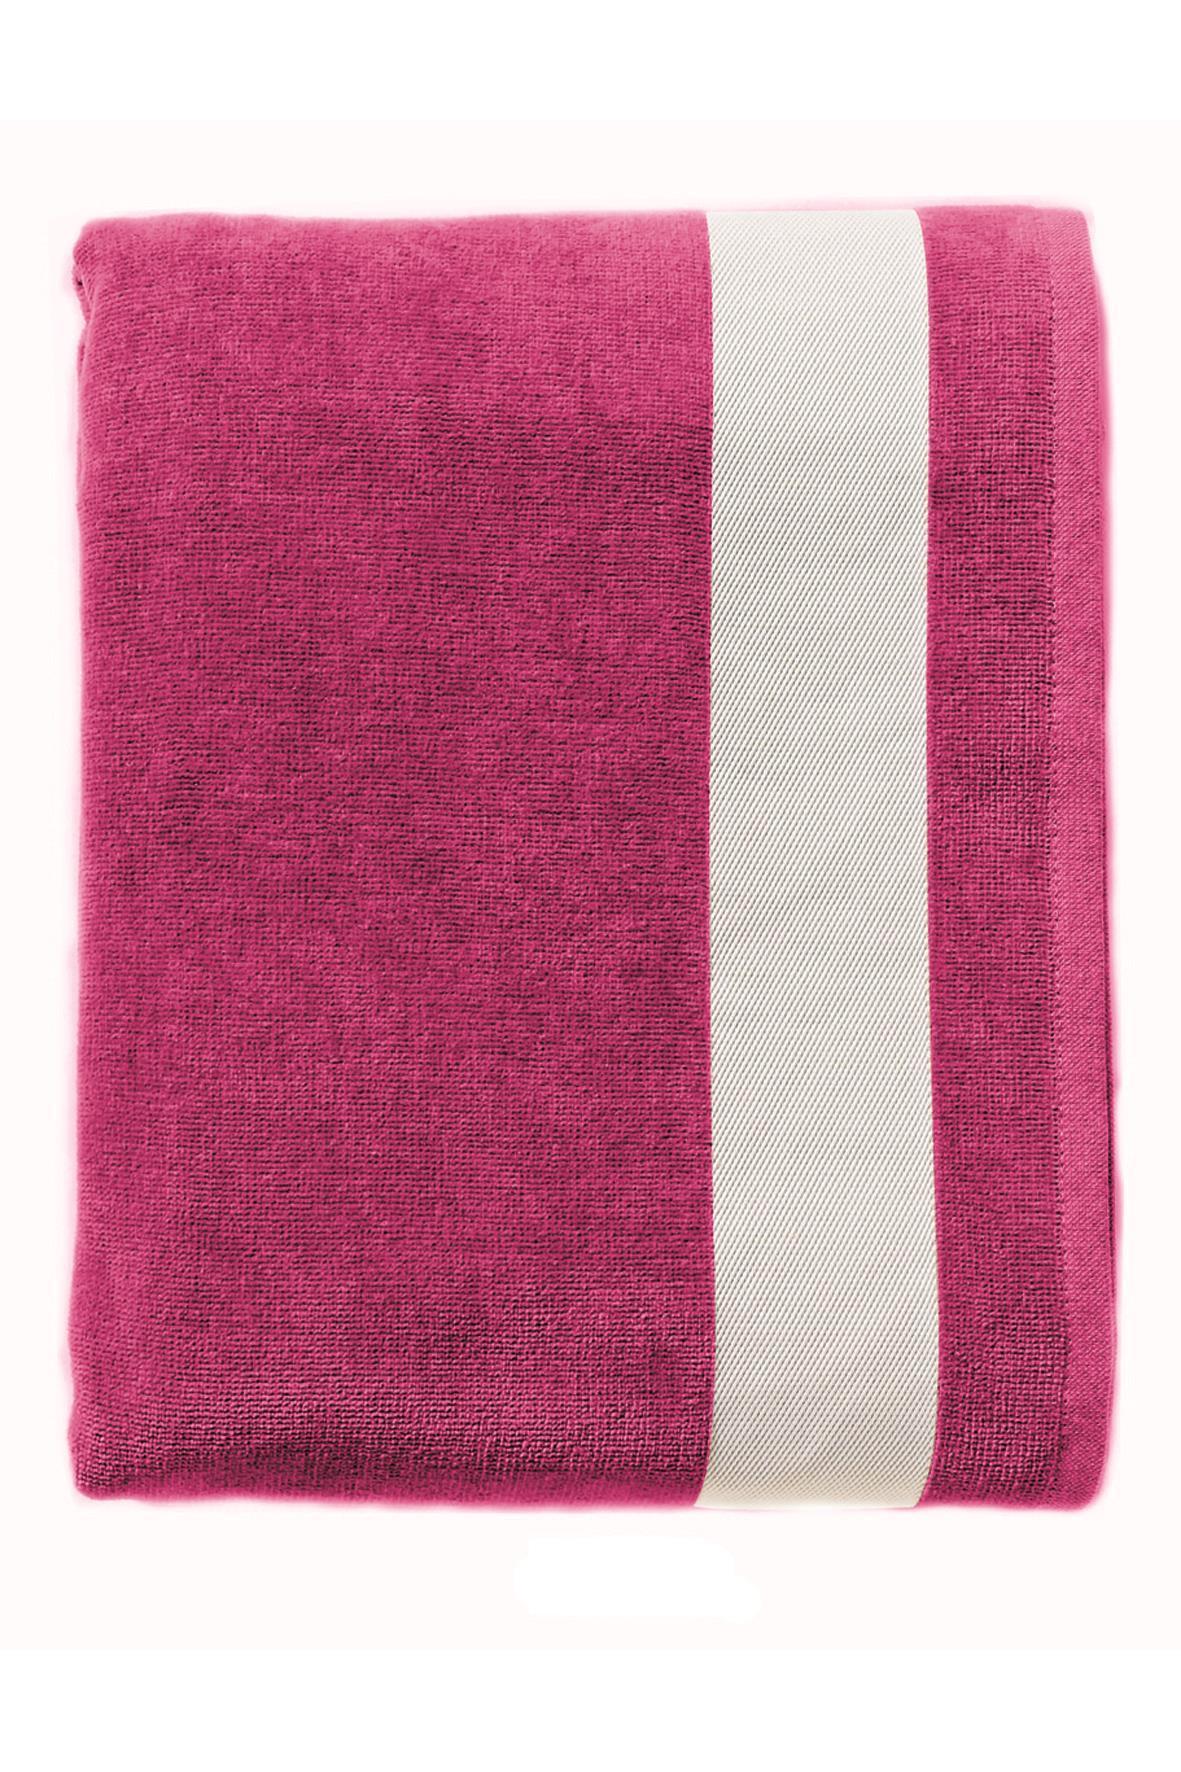 Badhandoek fuchsia roze 100 x 160 cm strand strandvakantie strandhanddoek met witte rand stijlvol